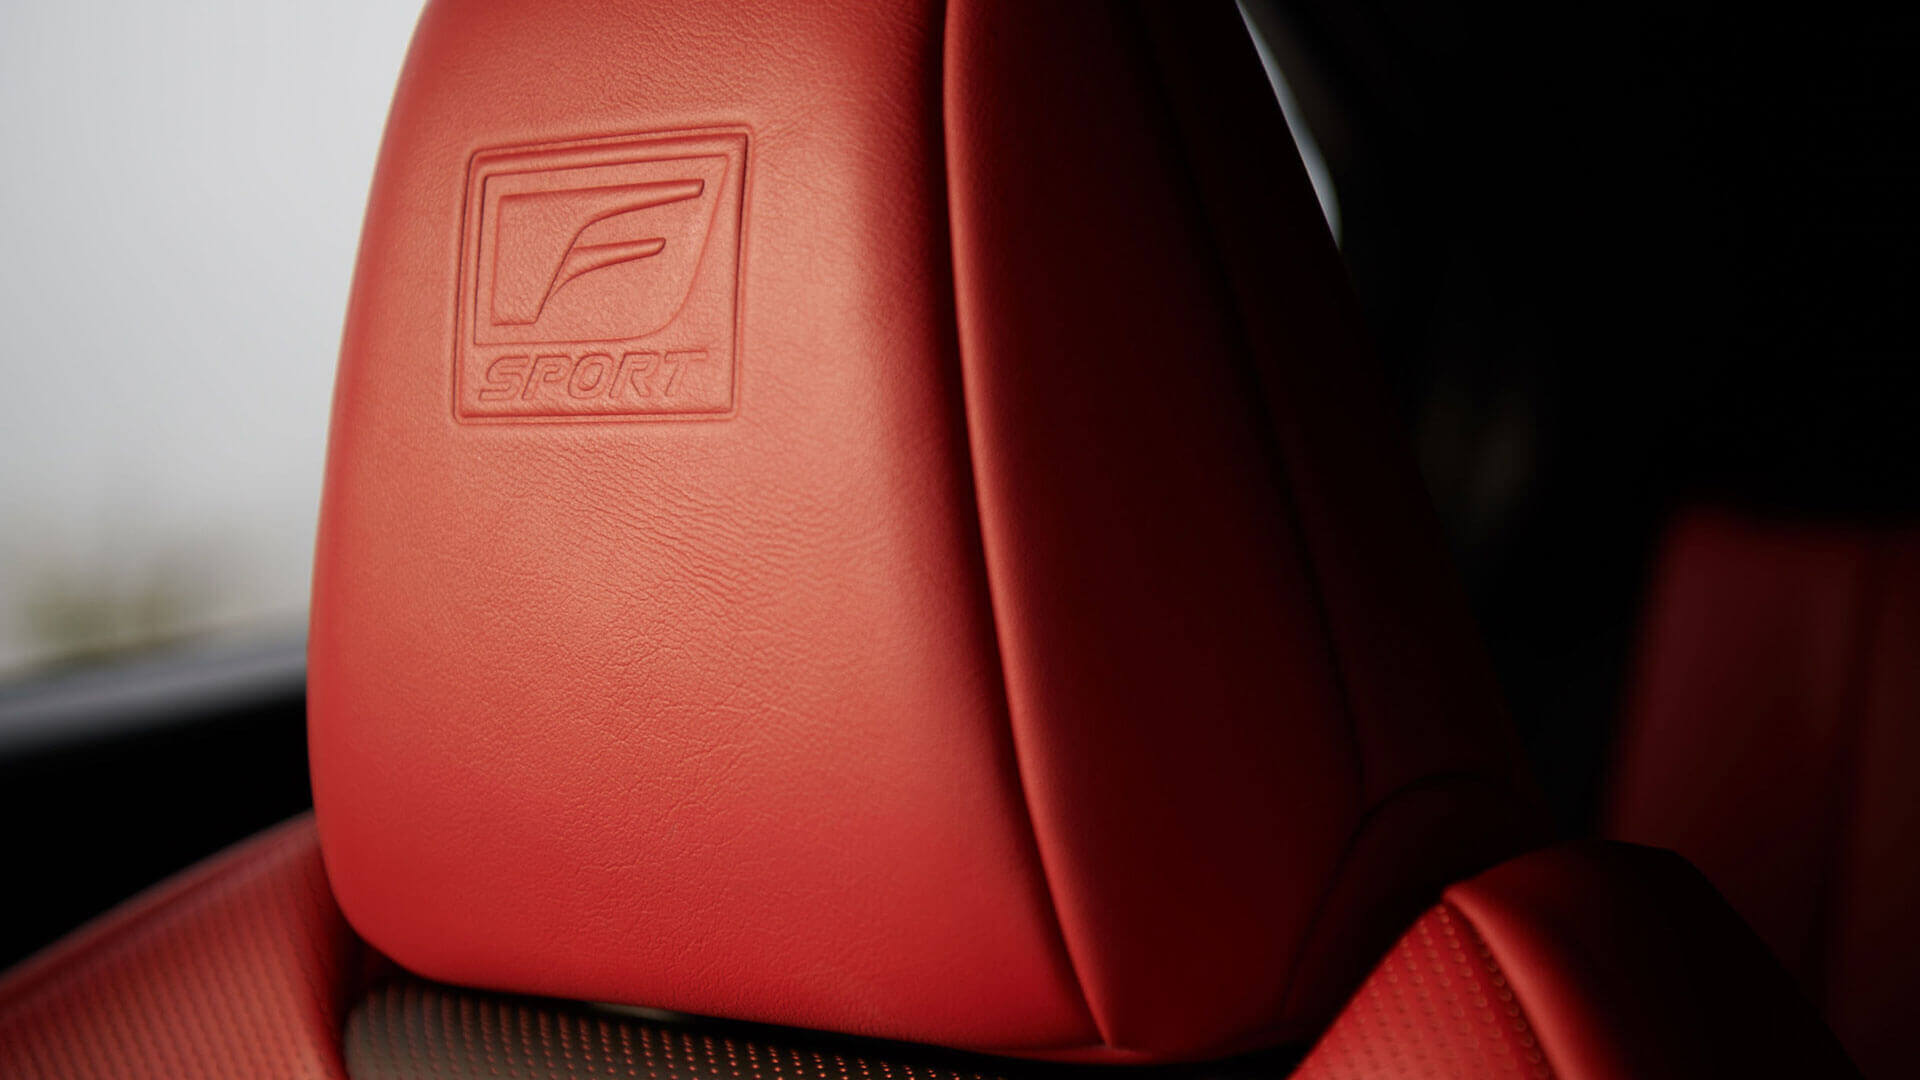 Lexus F-Sport seat